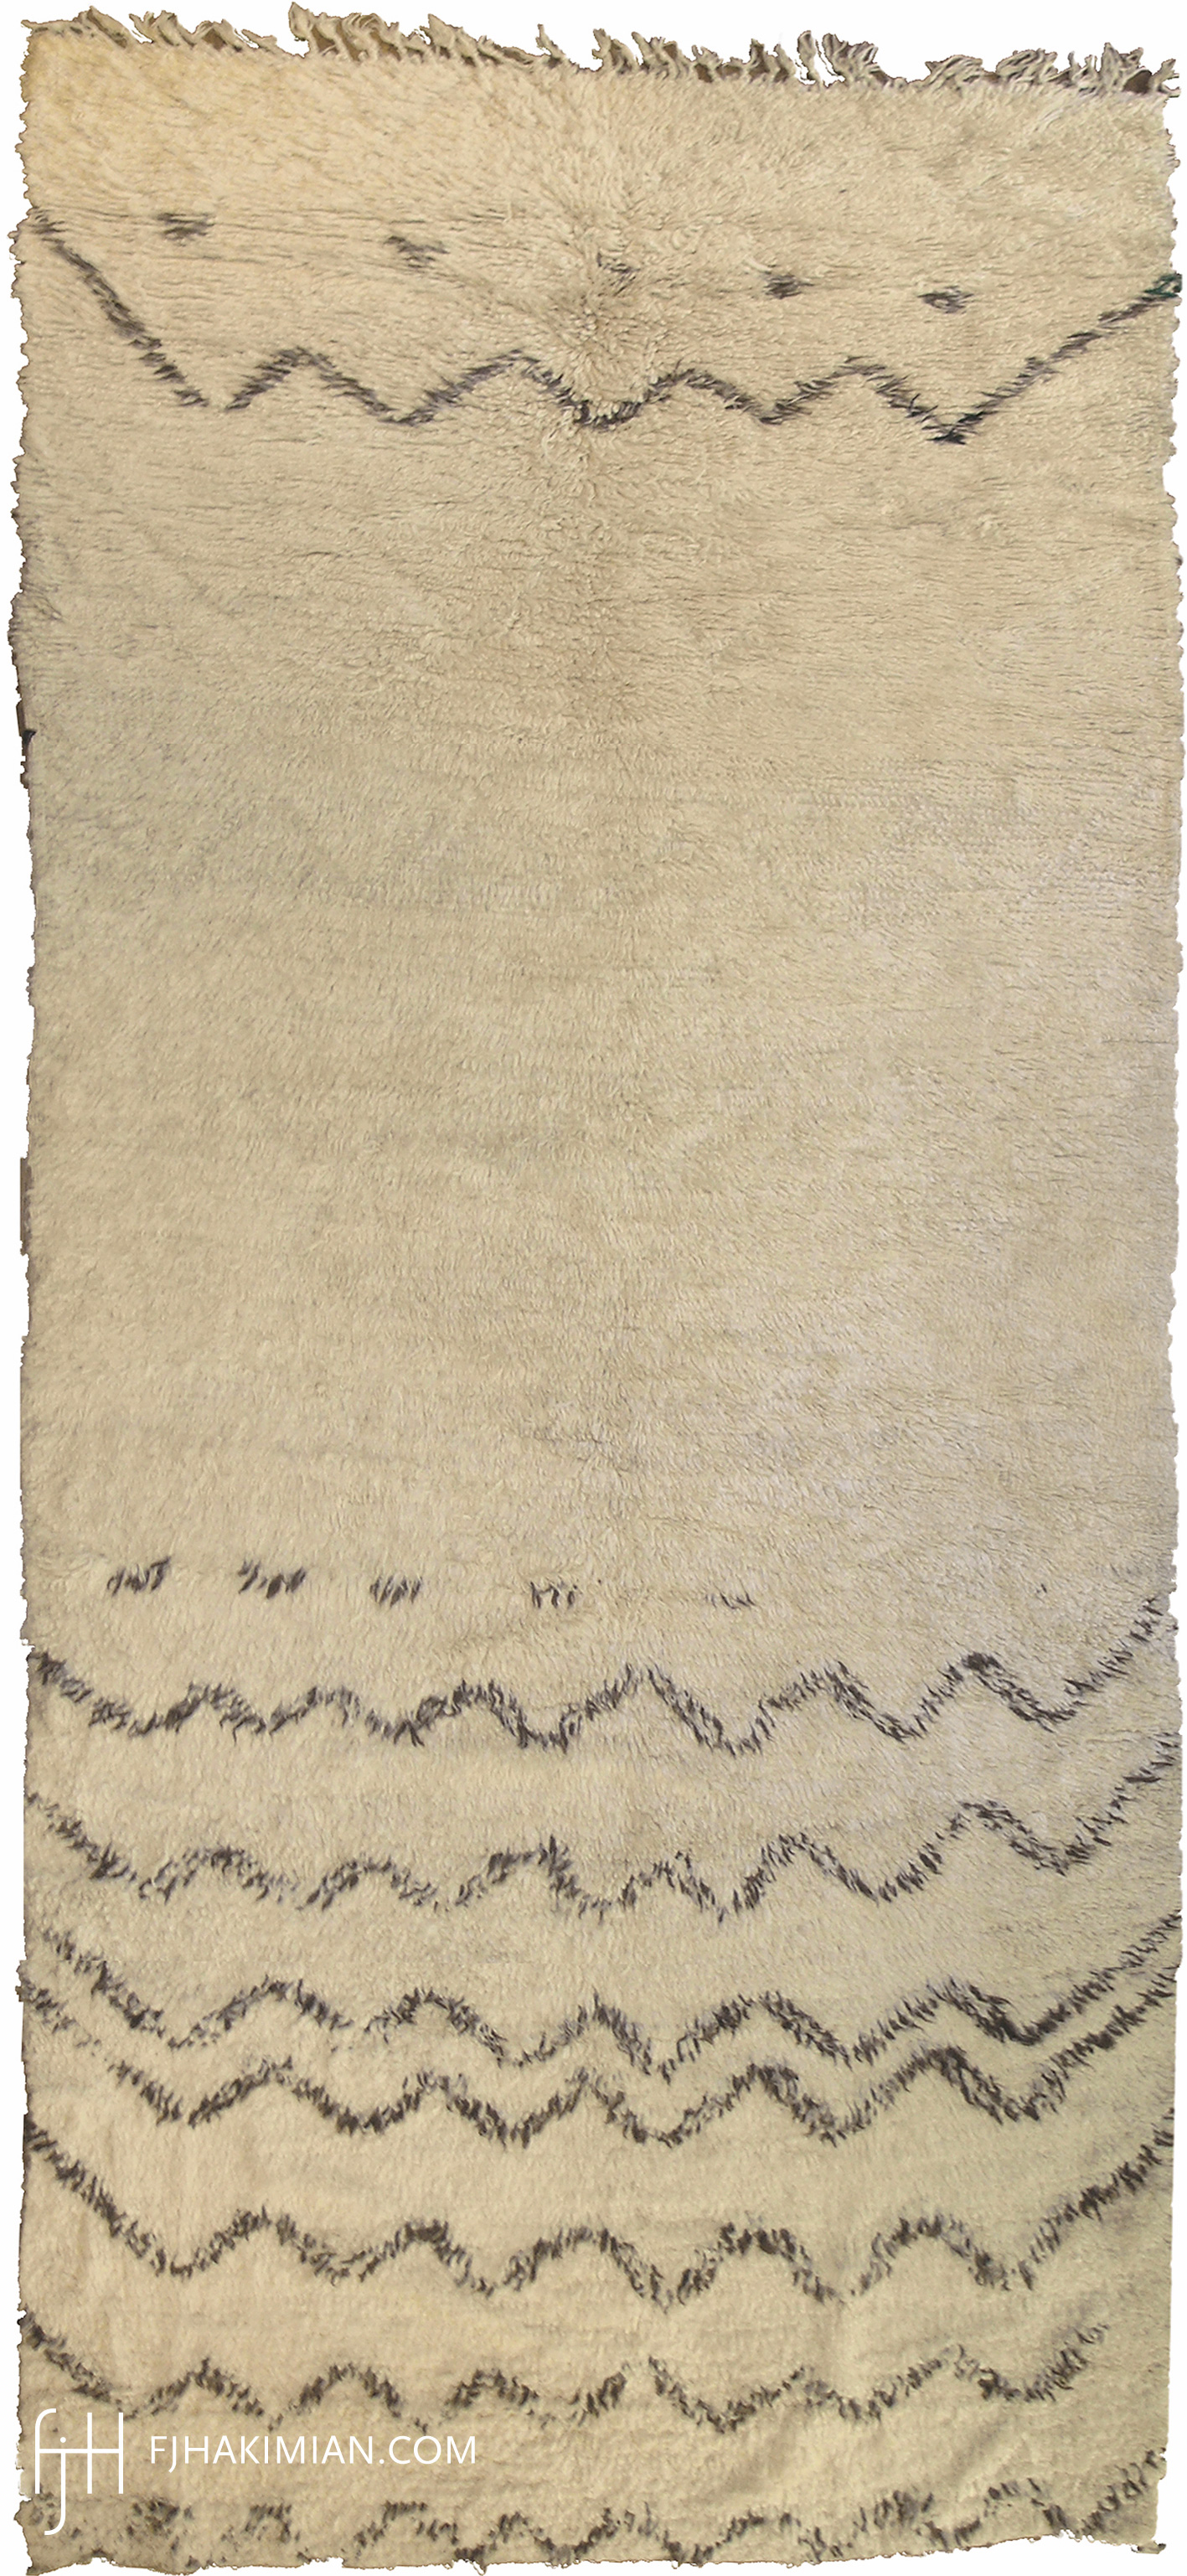 FJ Hakimian | 15006 | Vintage Moroccan Carpet